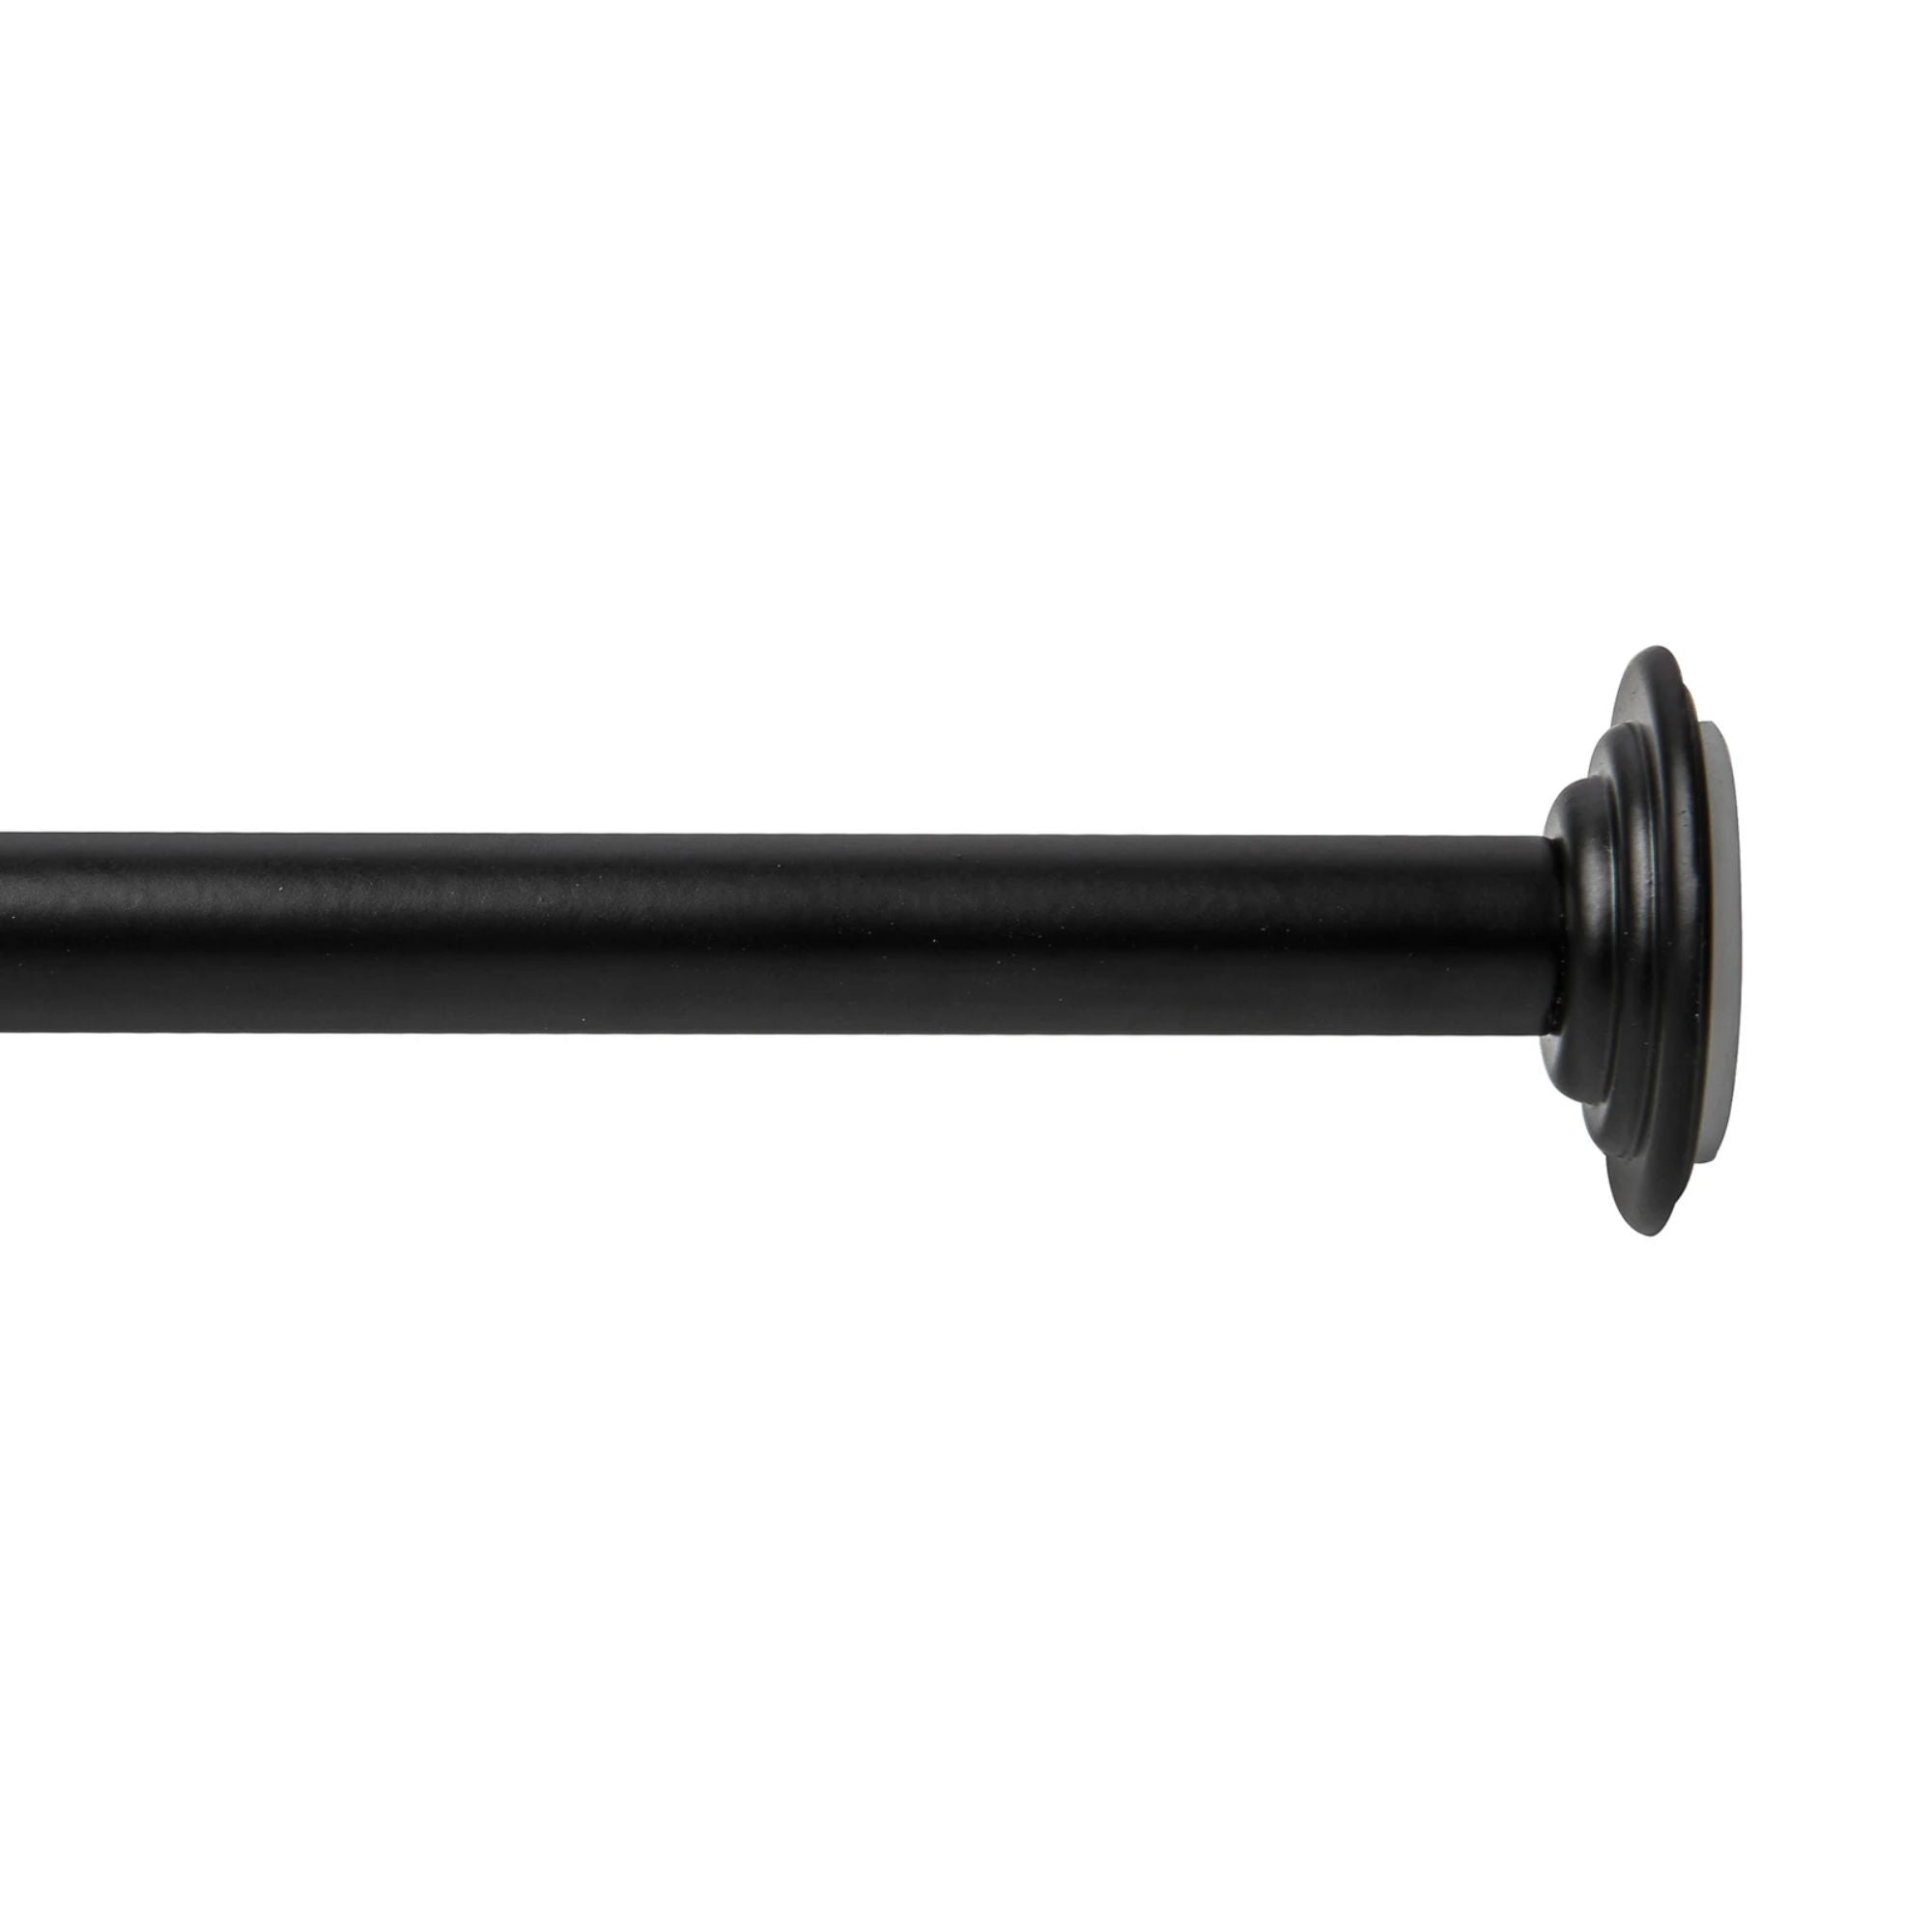 Umbra Coretto Adjustable Curtain Rod (91-137cm) , Black